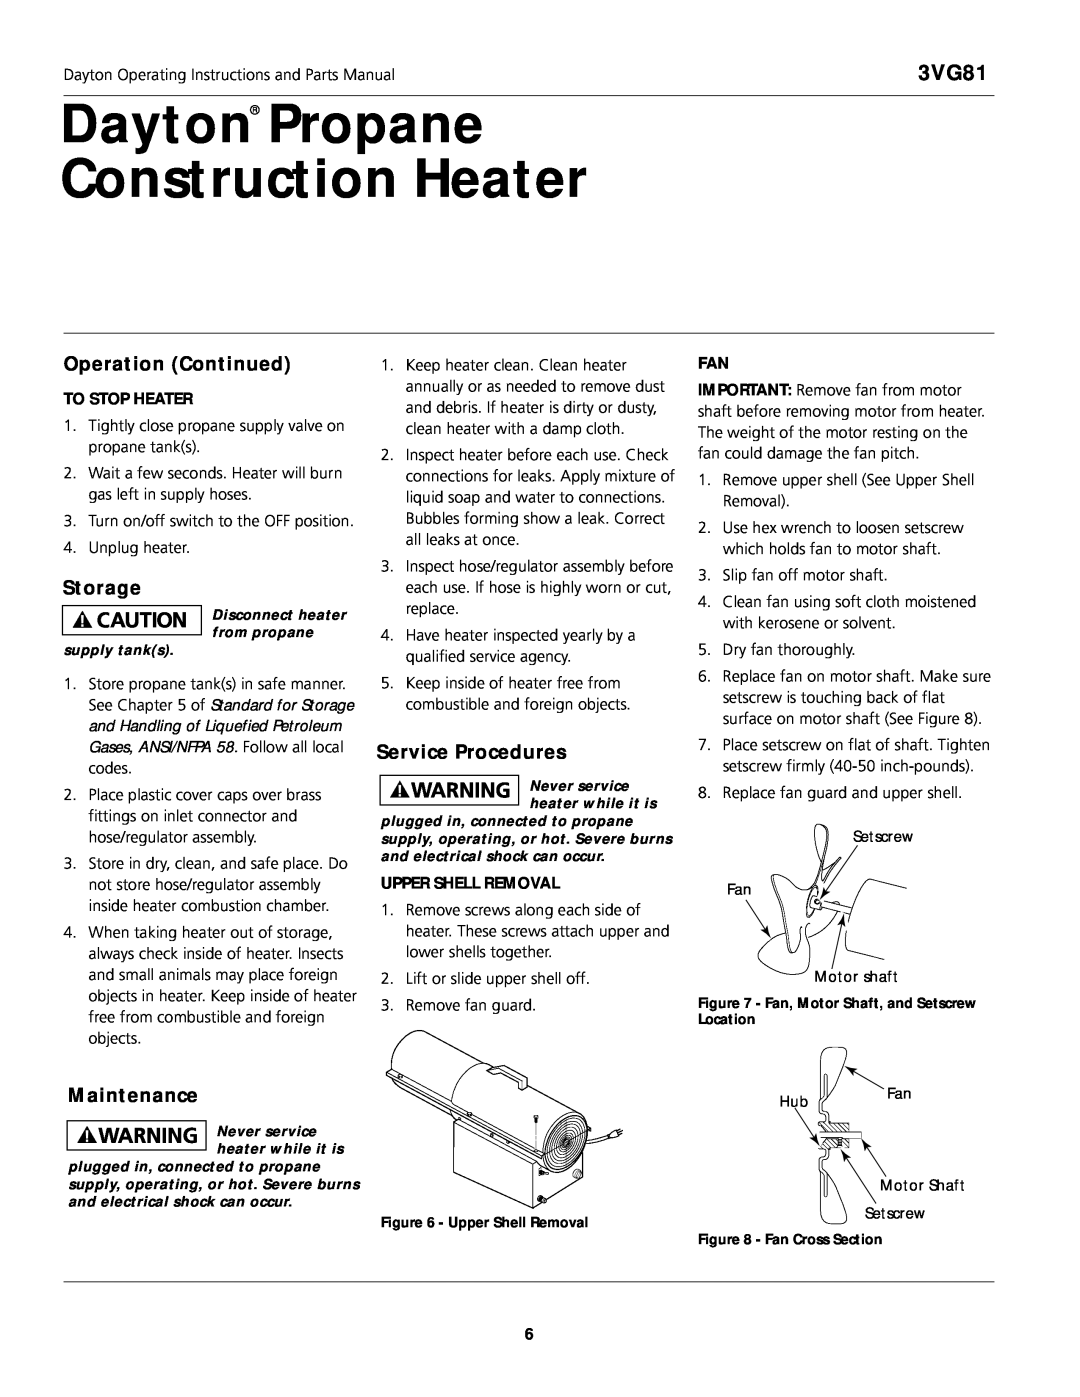 Dayton 3VG81 manual Dayton Propane Construction Heater, Operation Continued, Storage, Service Procedures, Maintenance 